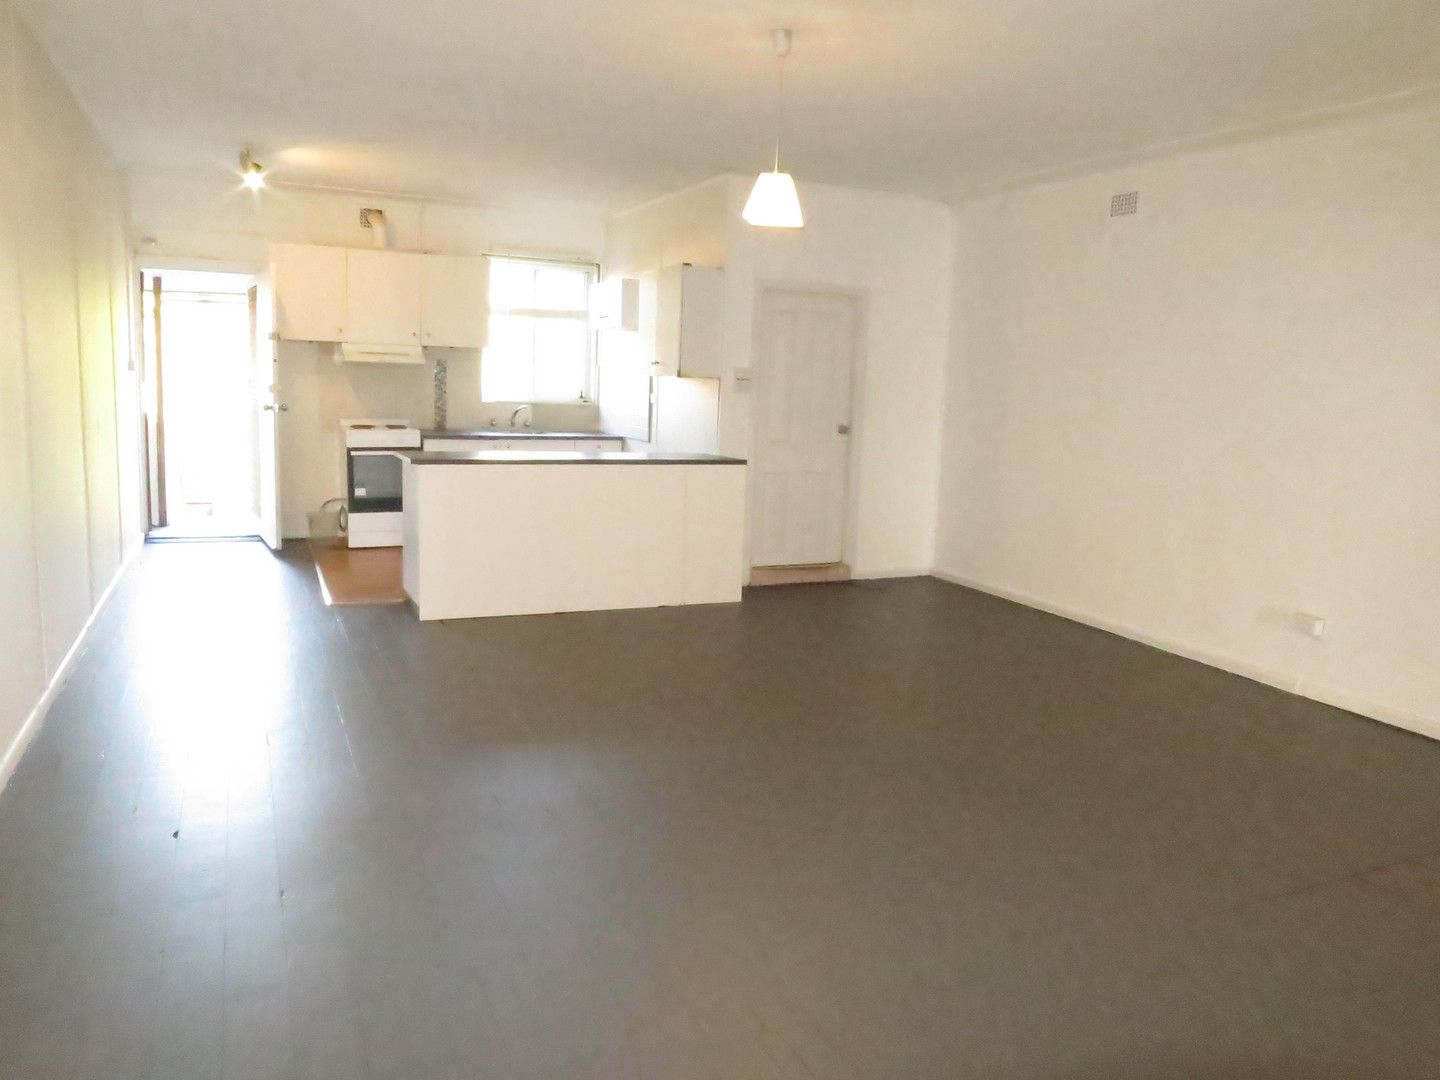 2 bedrooms Apartment / Unit / Flat in 2/284-286 Belmore Road RIVERWOOD NSW, 2210